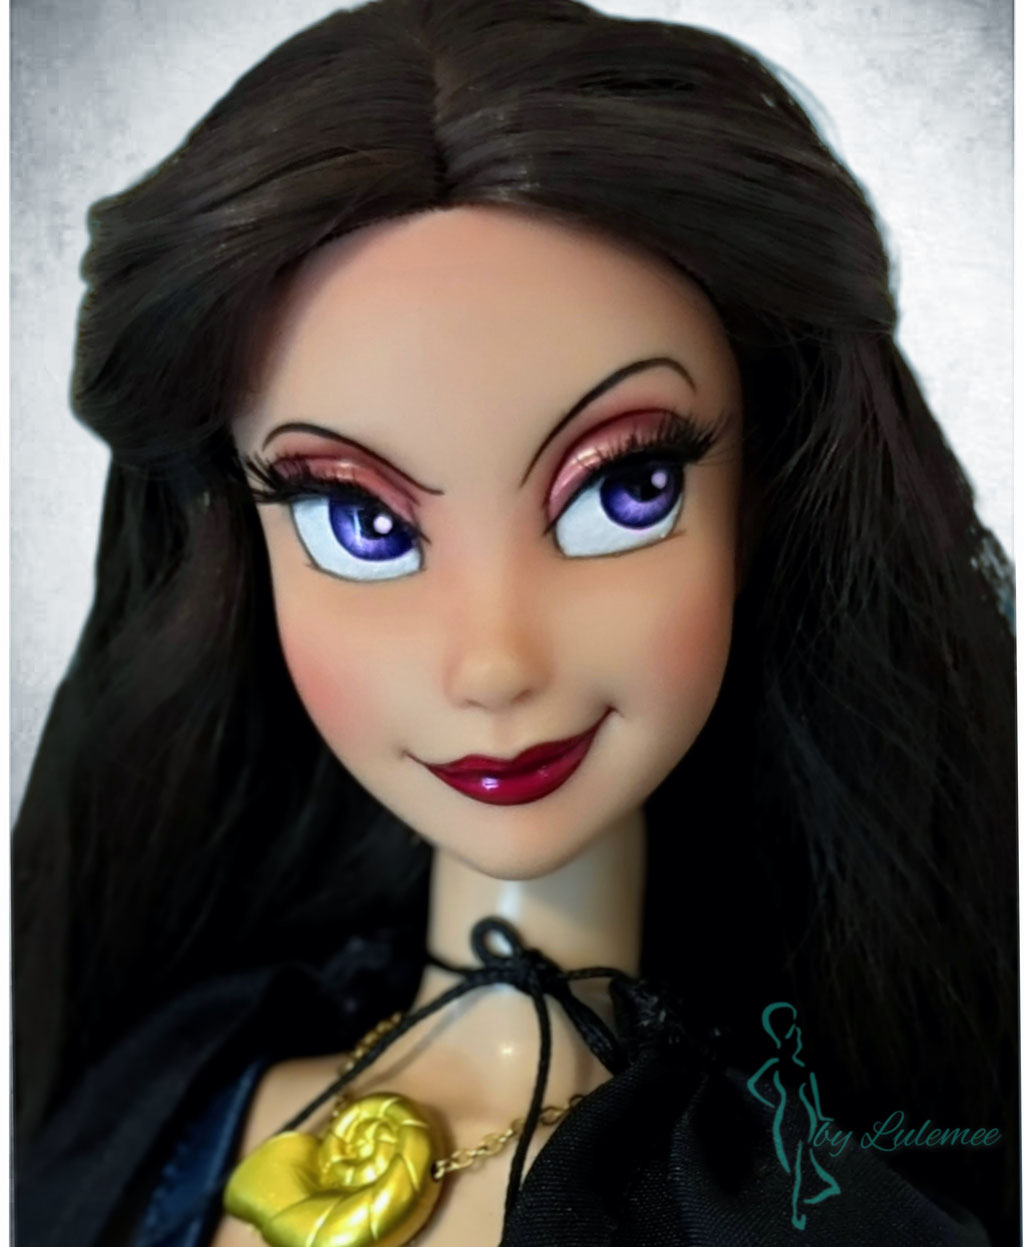 Vanessa OOAK doll from The Little Mermaid